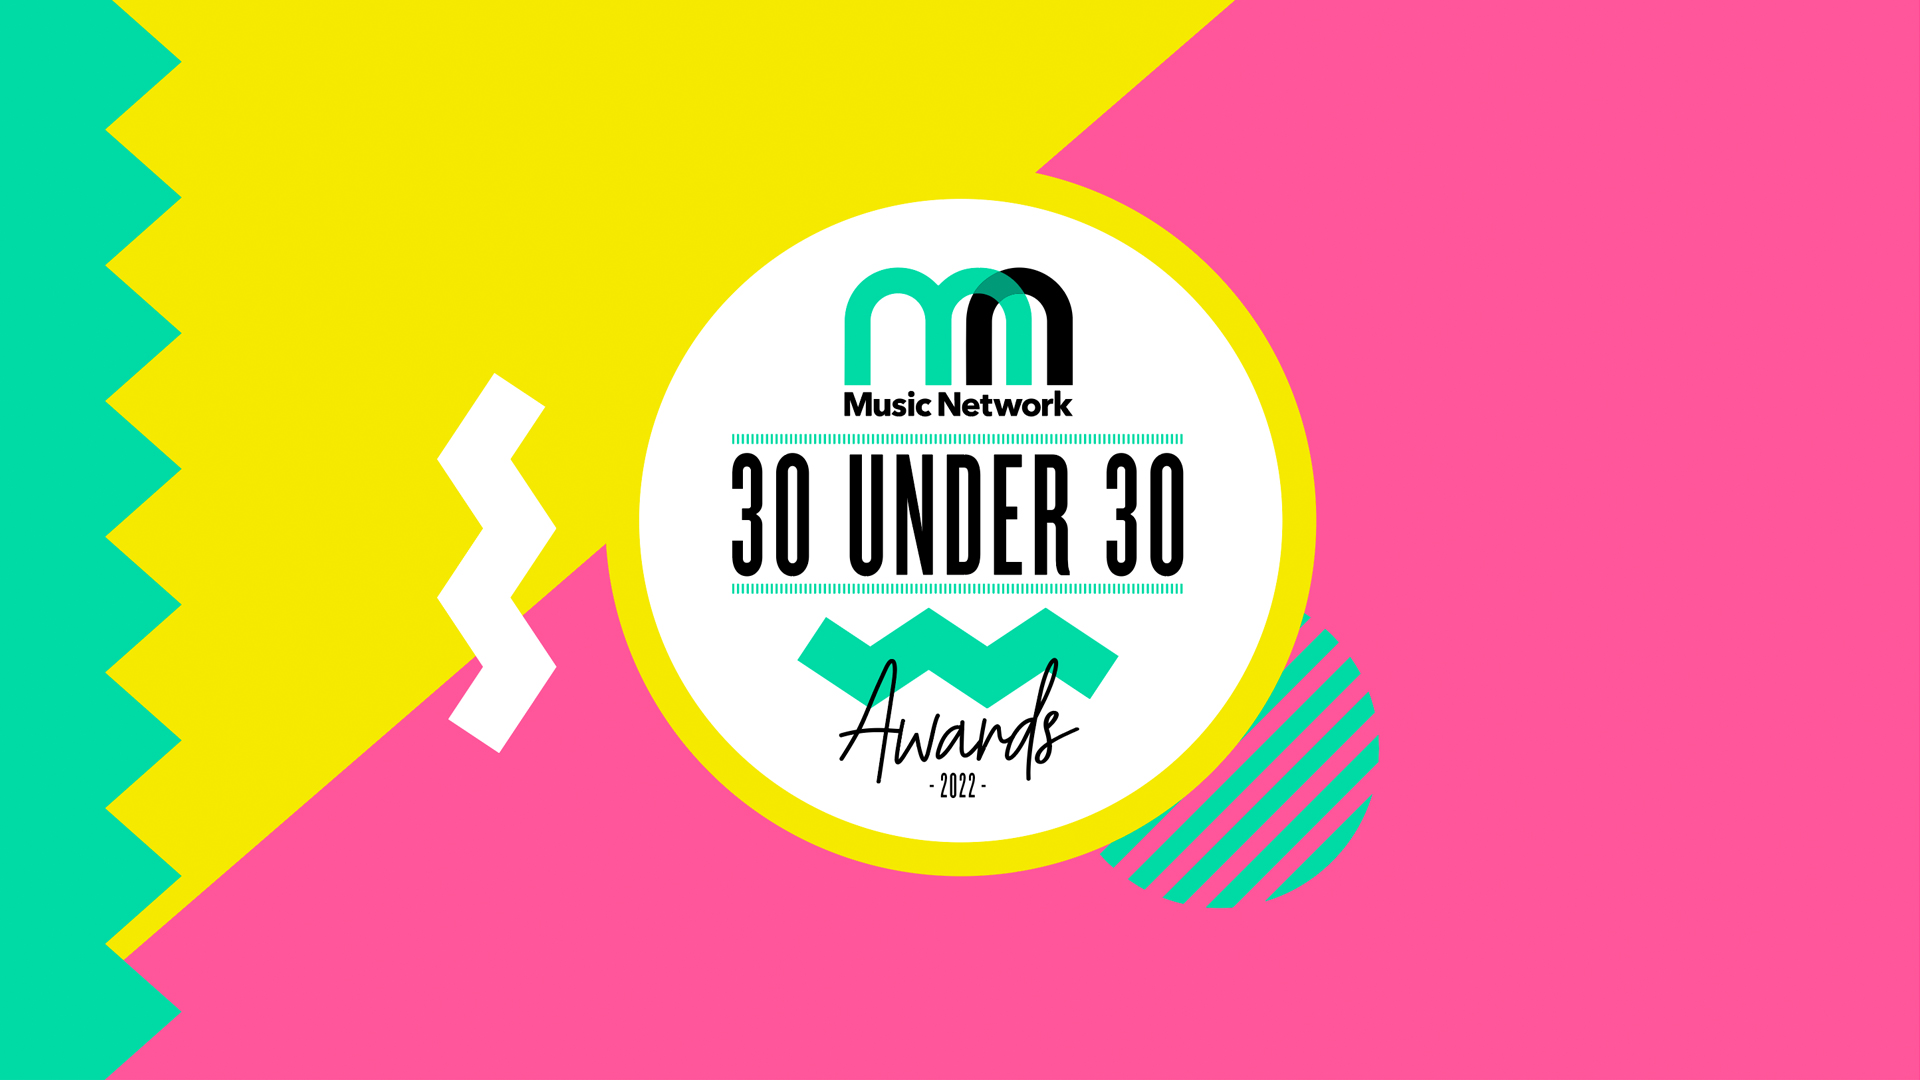 Save the dates: TMN 30 Under 30 Awards return January 2022